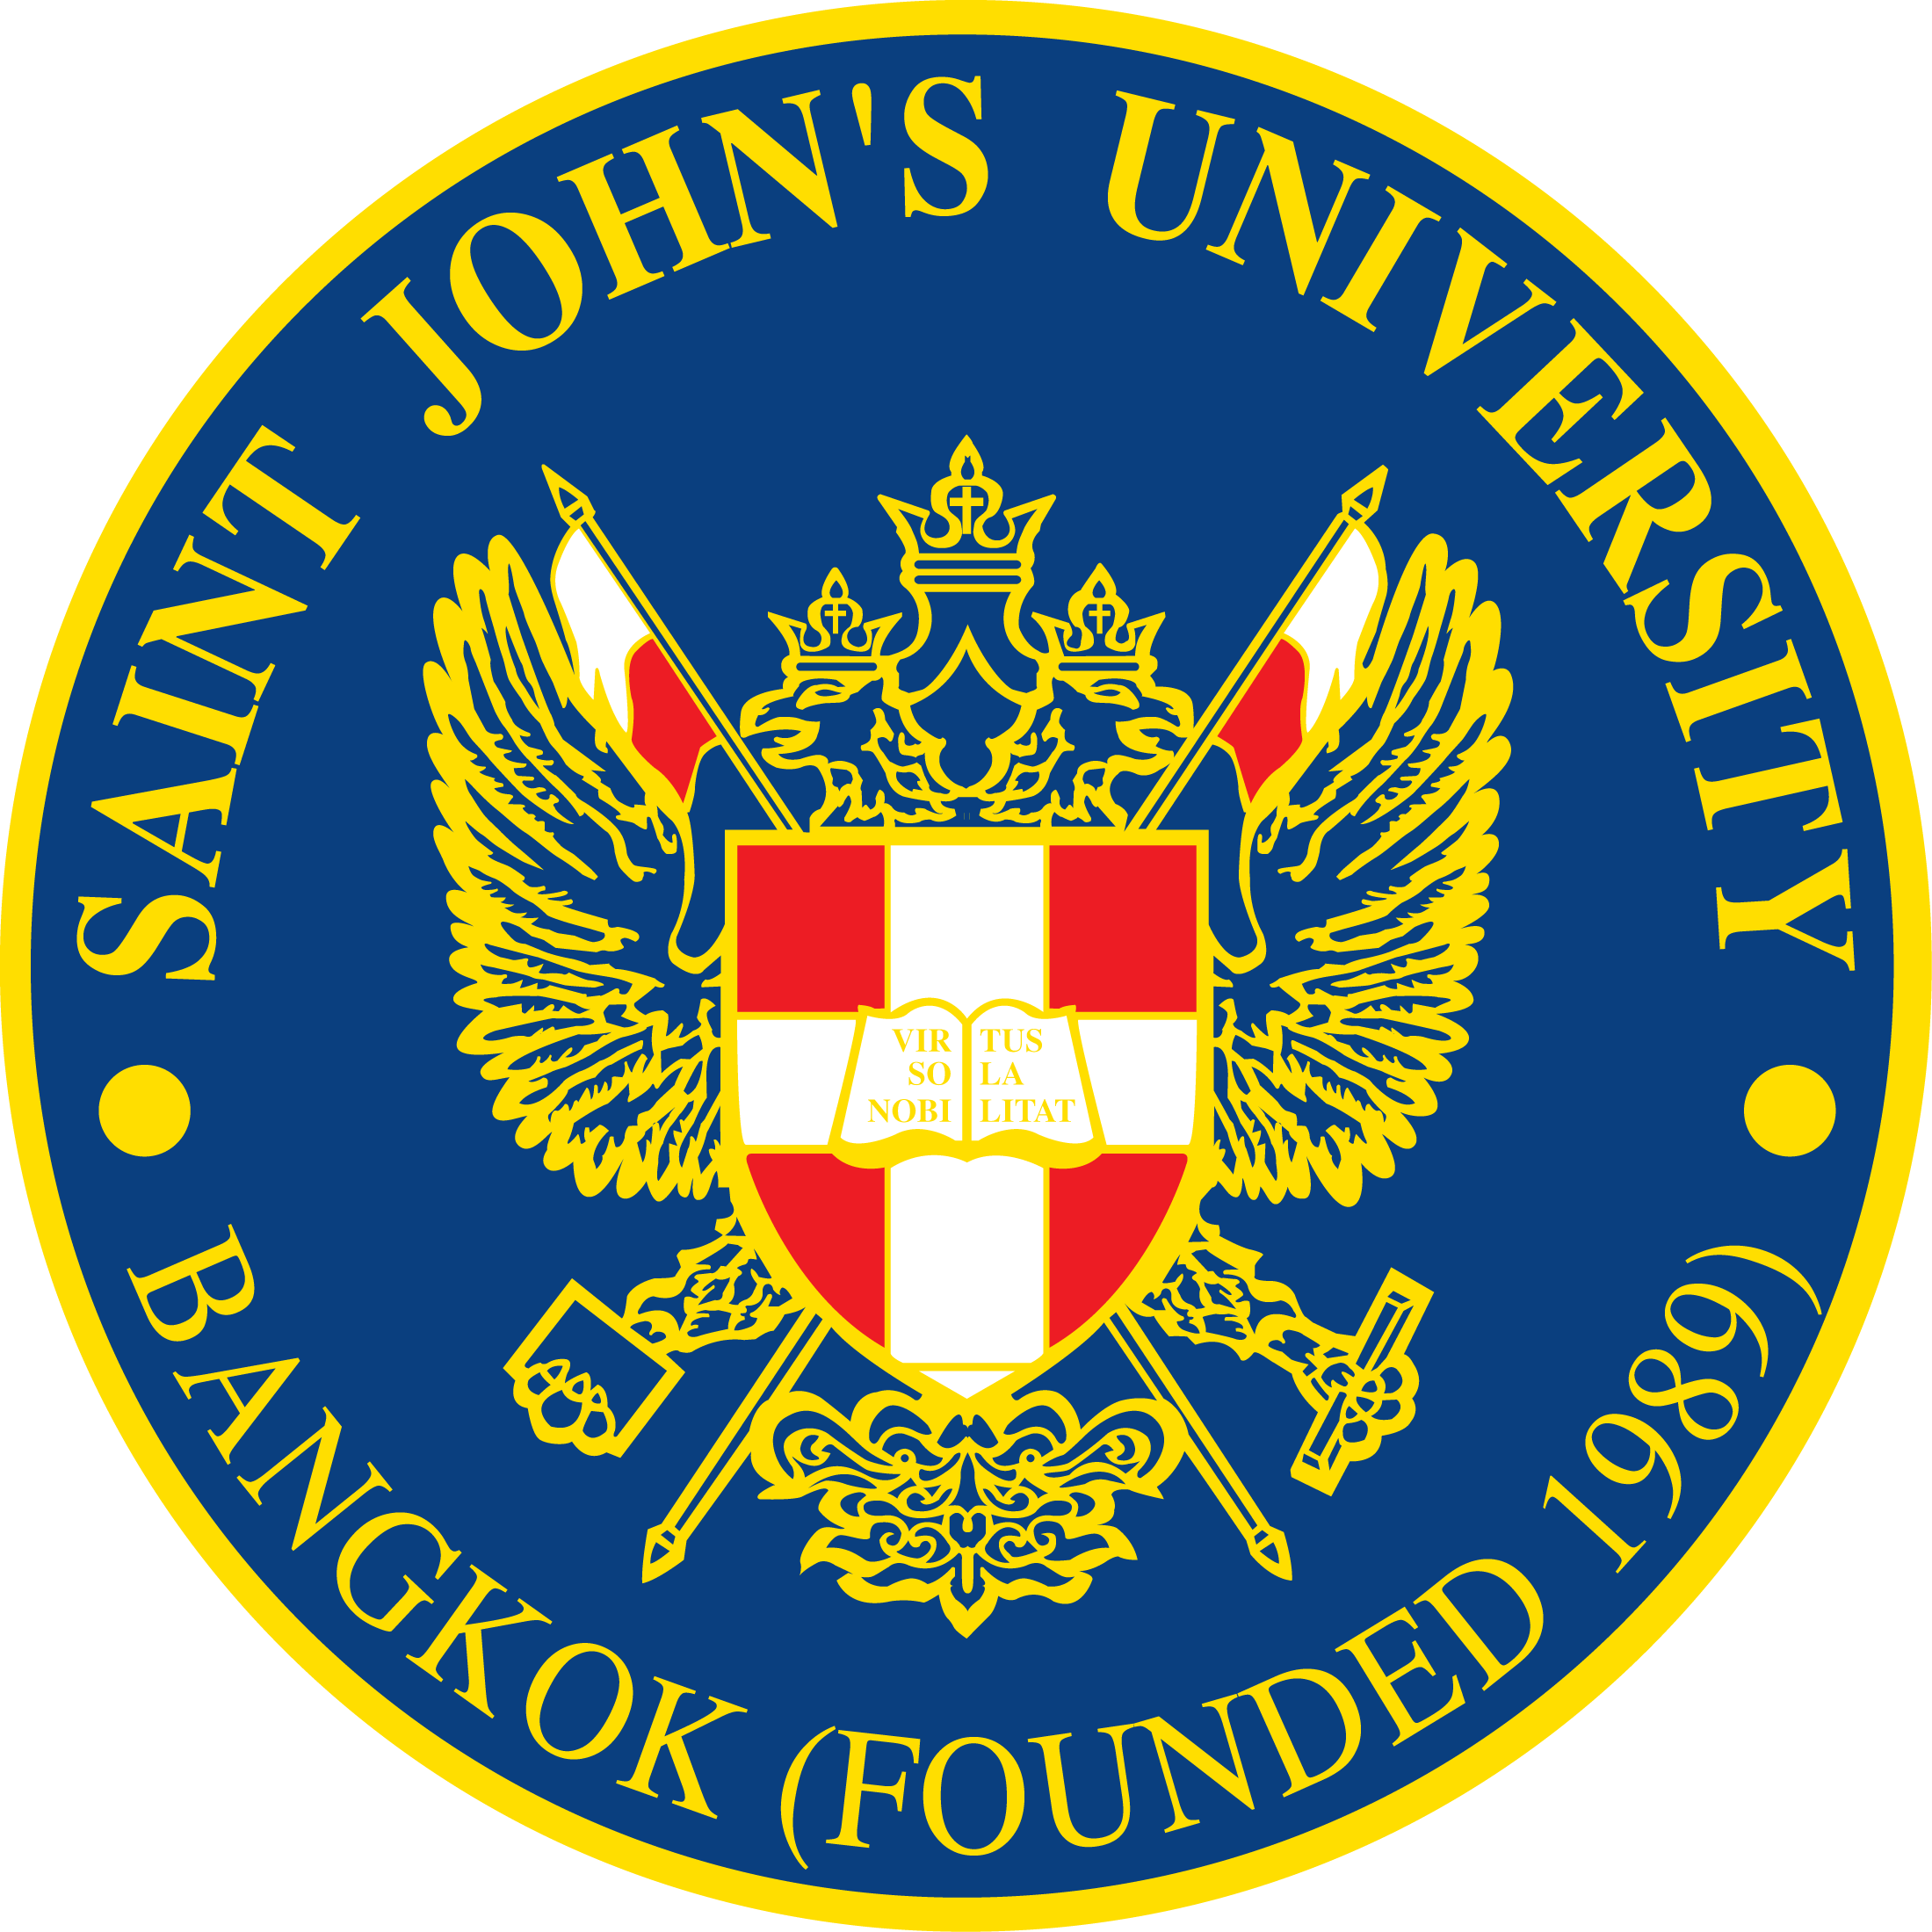 8.2 saint john university bangkok